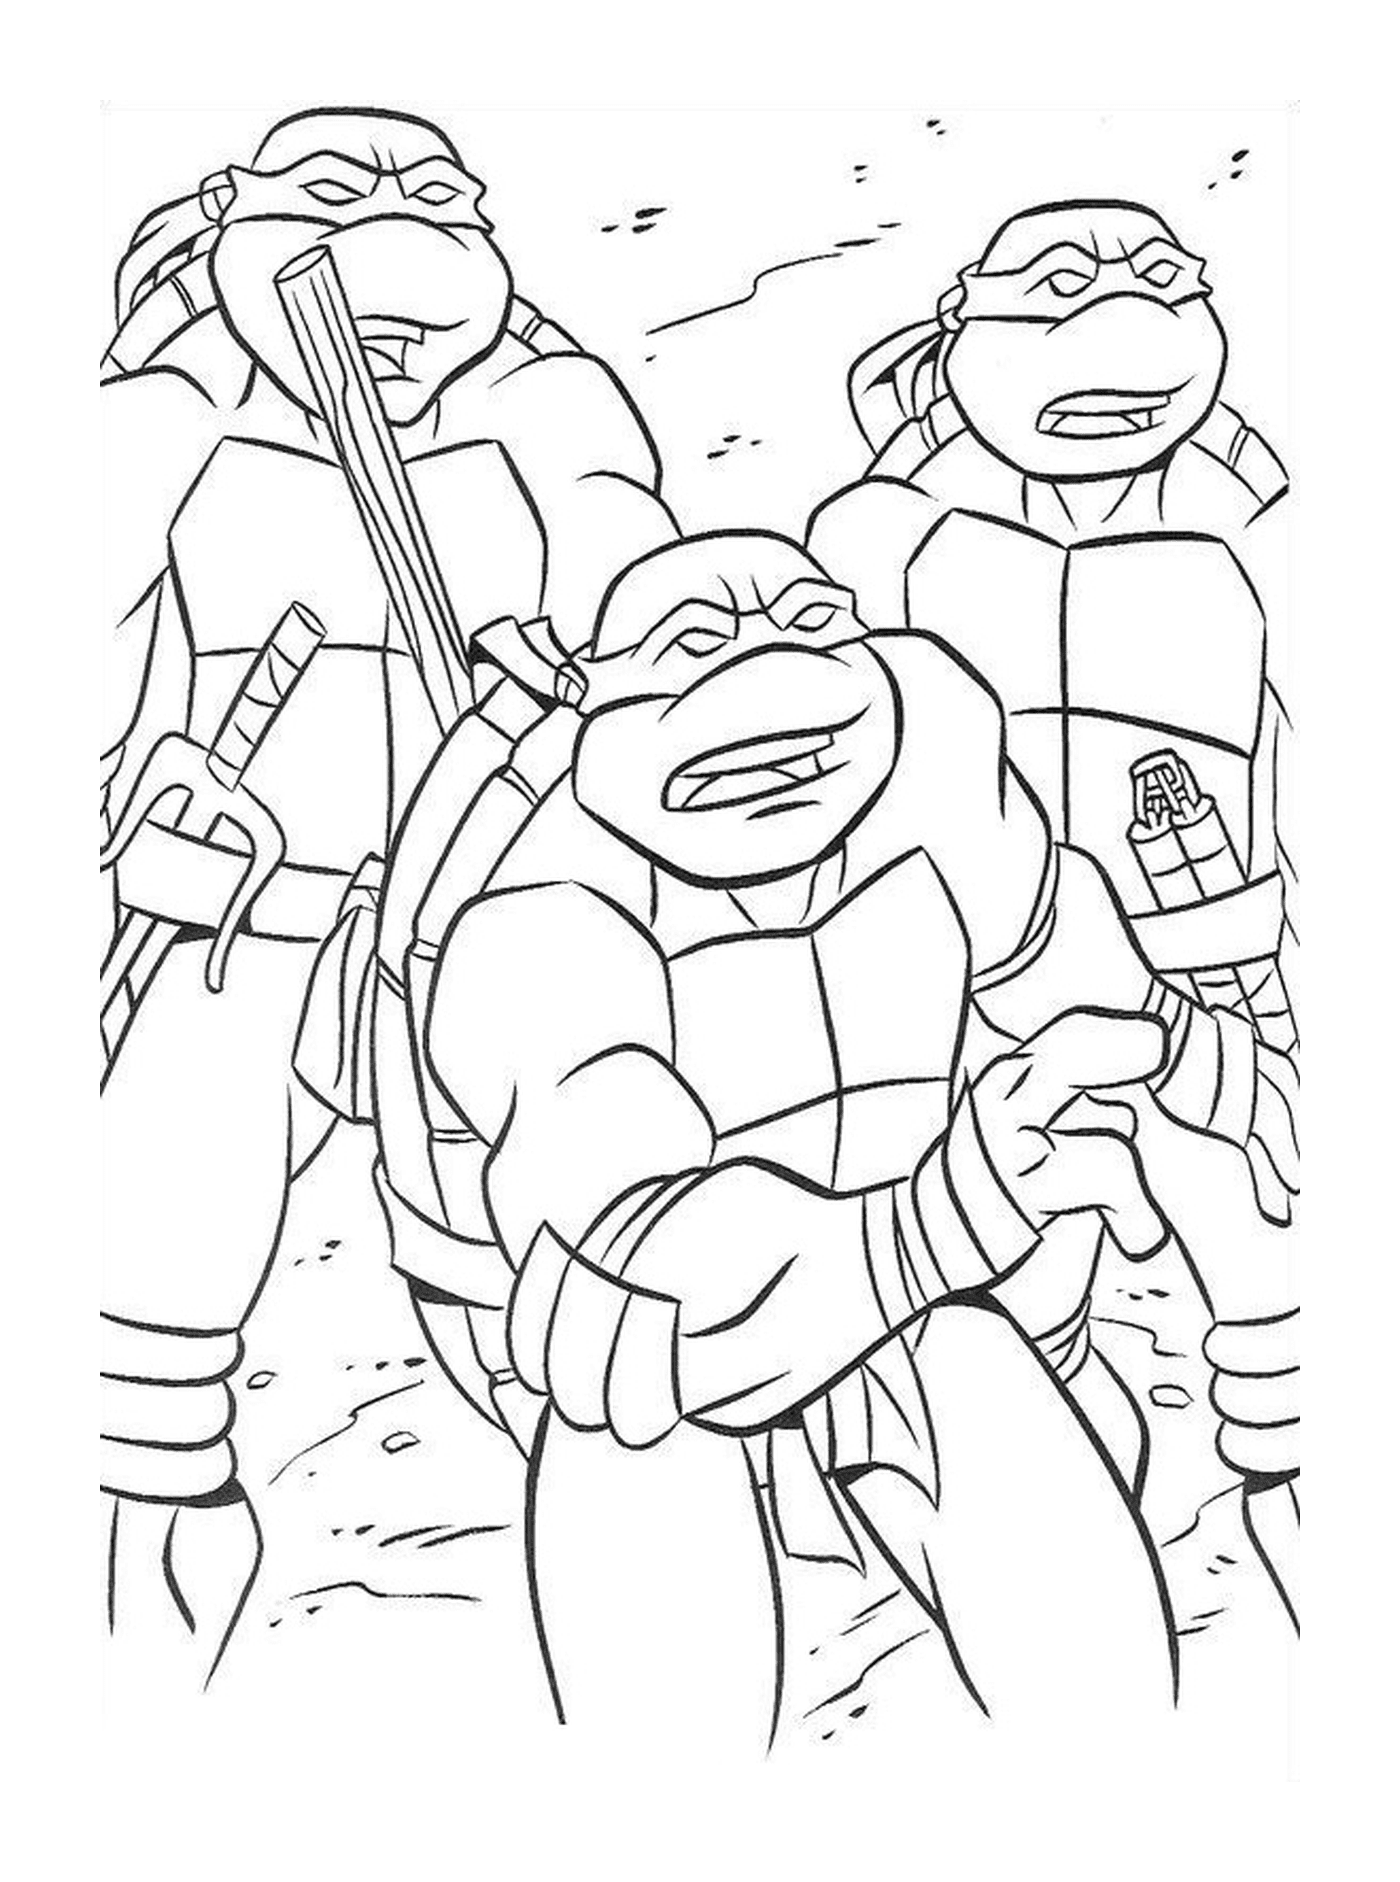  Grupo de tartarugas ninja solidárias 